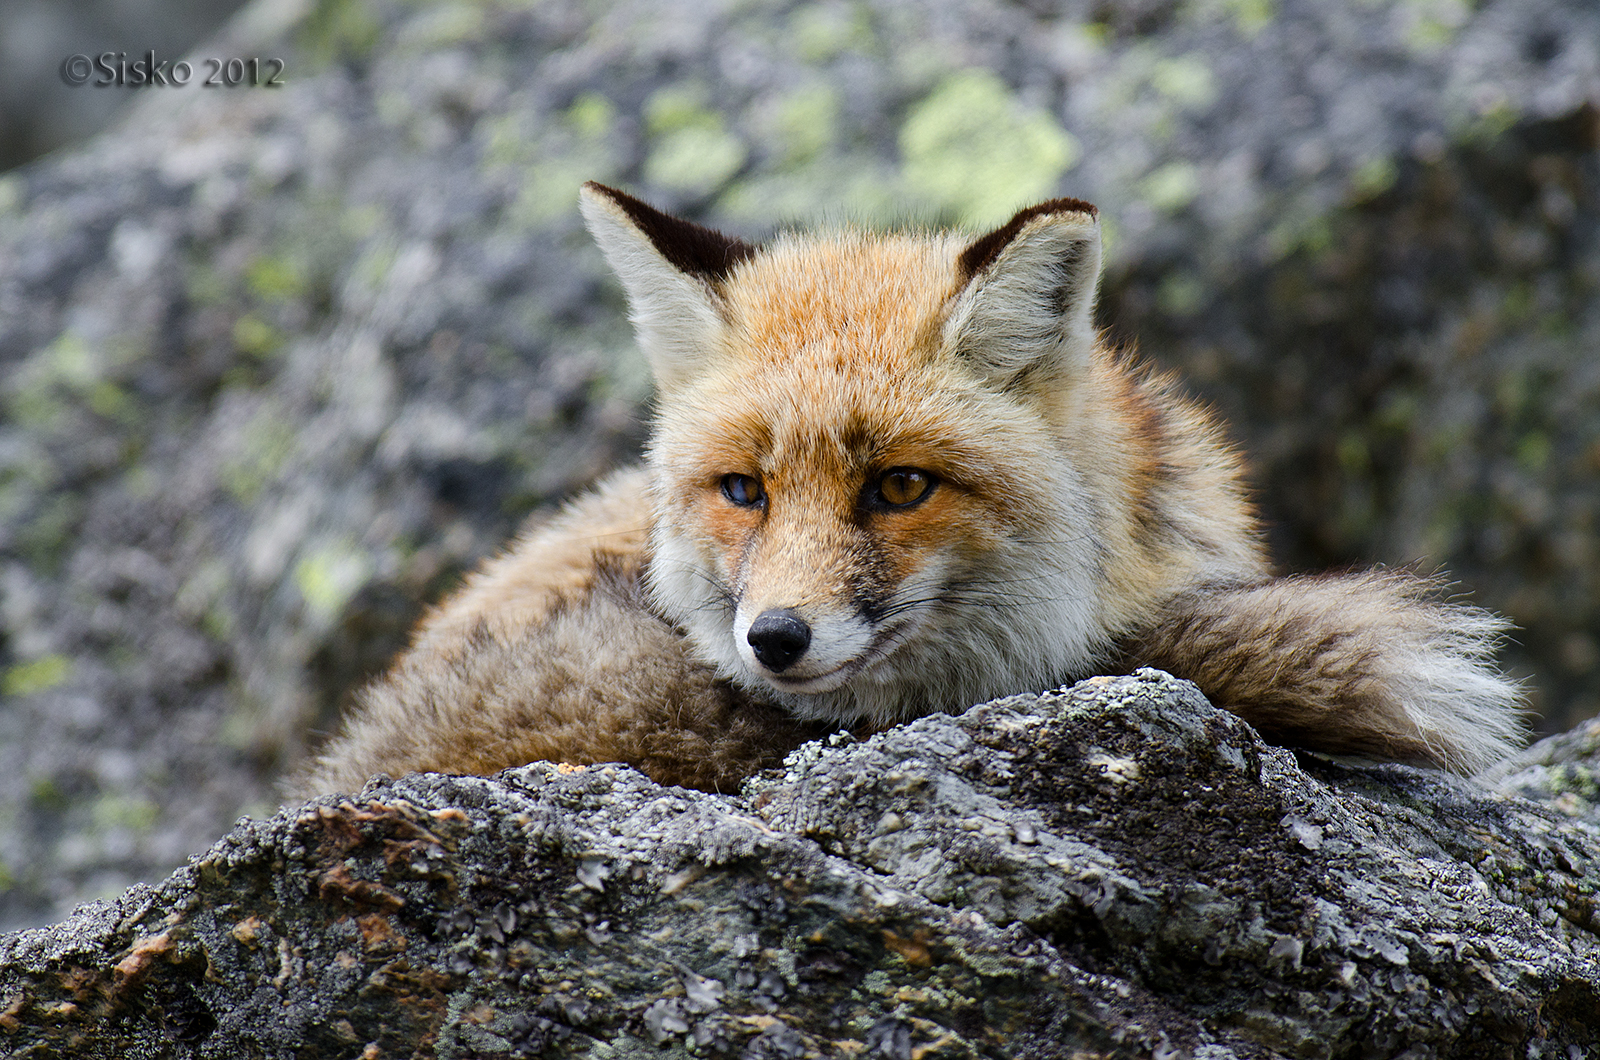 Fox in contemplation...